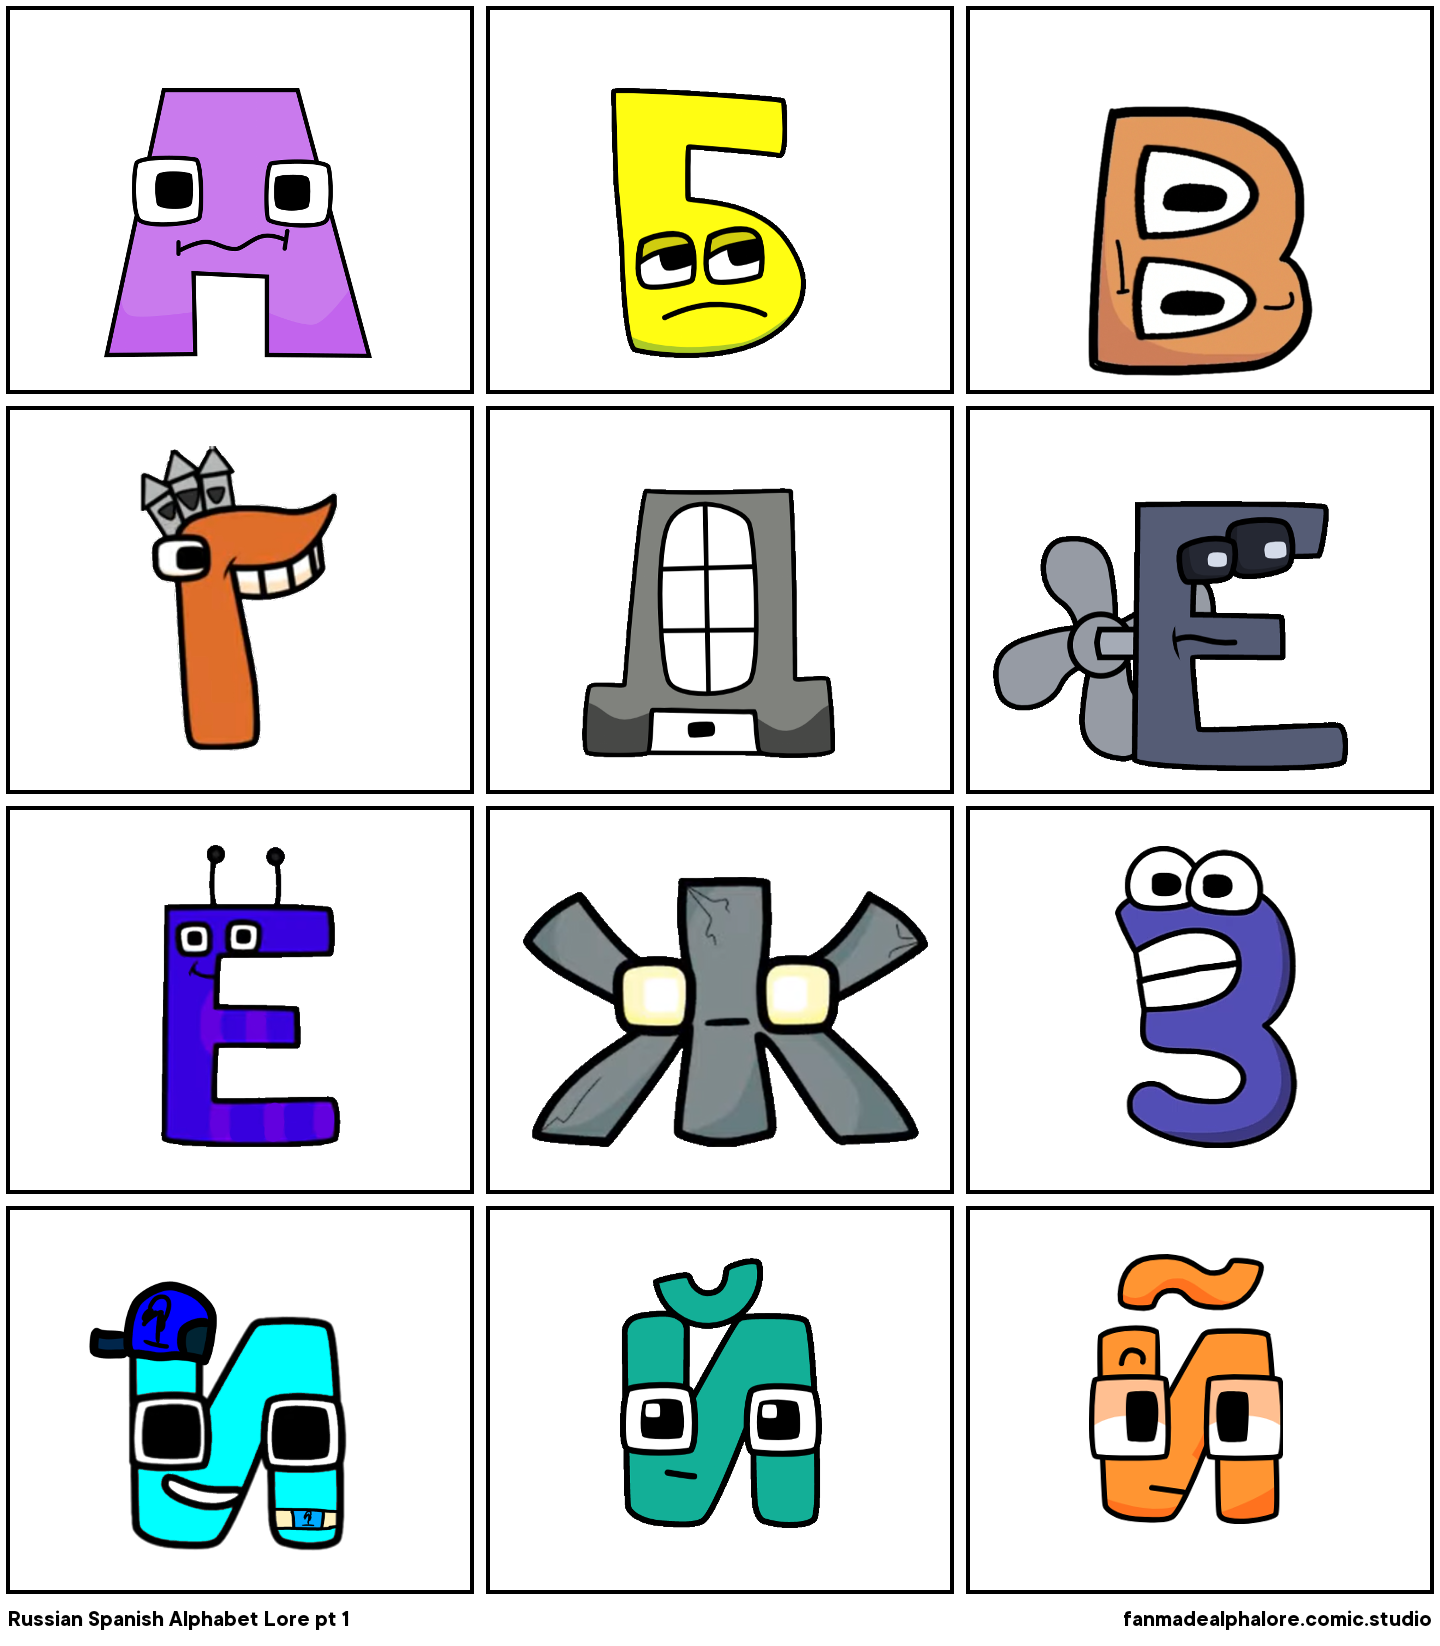 Unifon Alphabet Lore G vs Russian Alphabet Lore G(Г) vs Spanish Alphabet  Lore G vs English G 